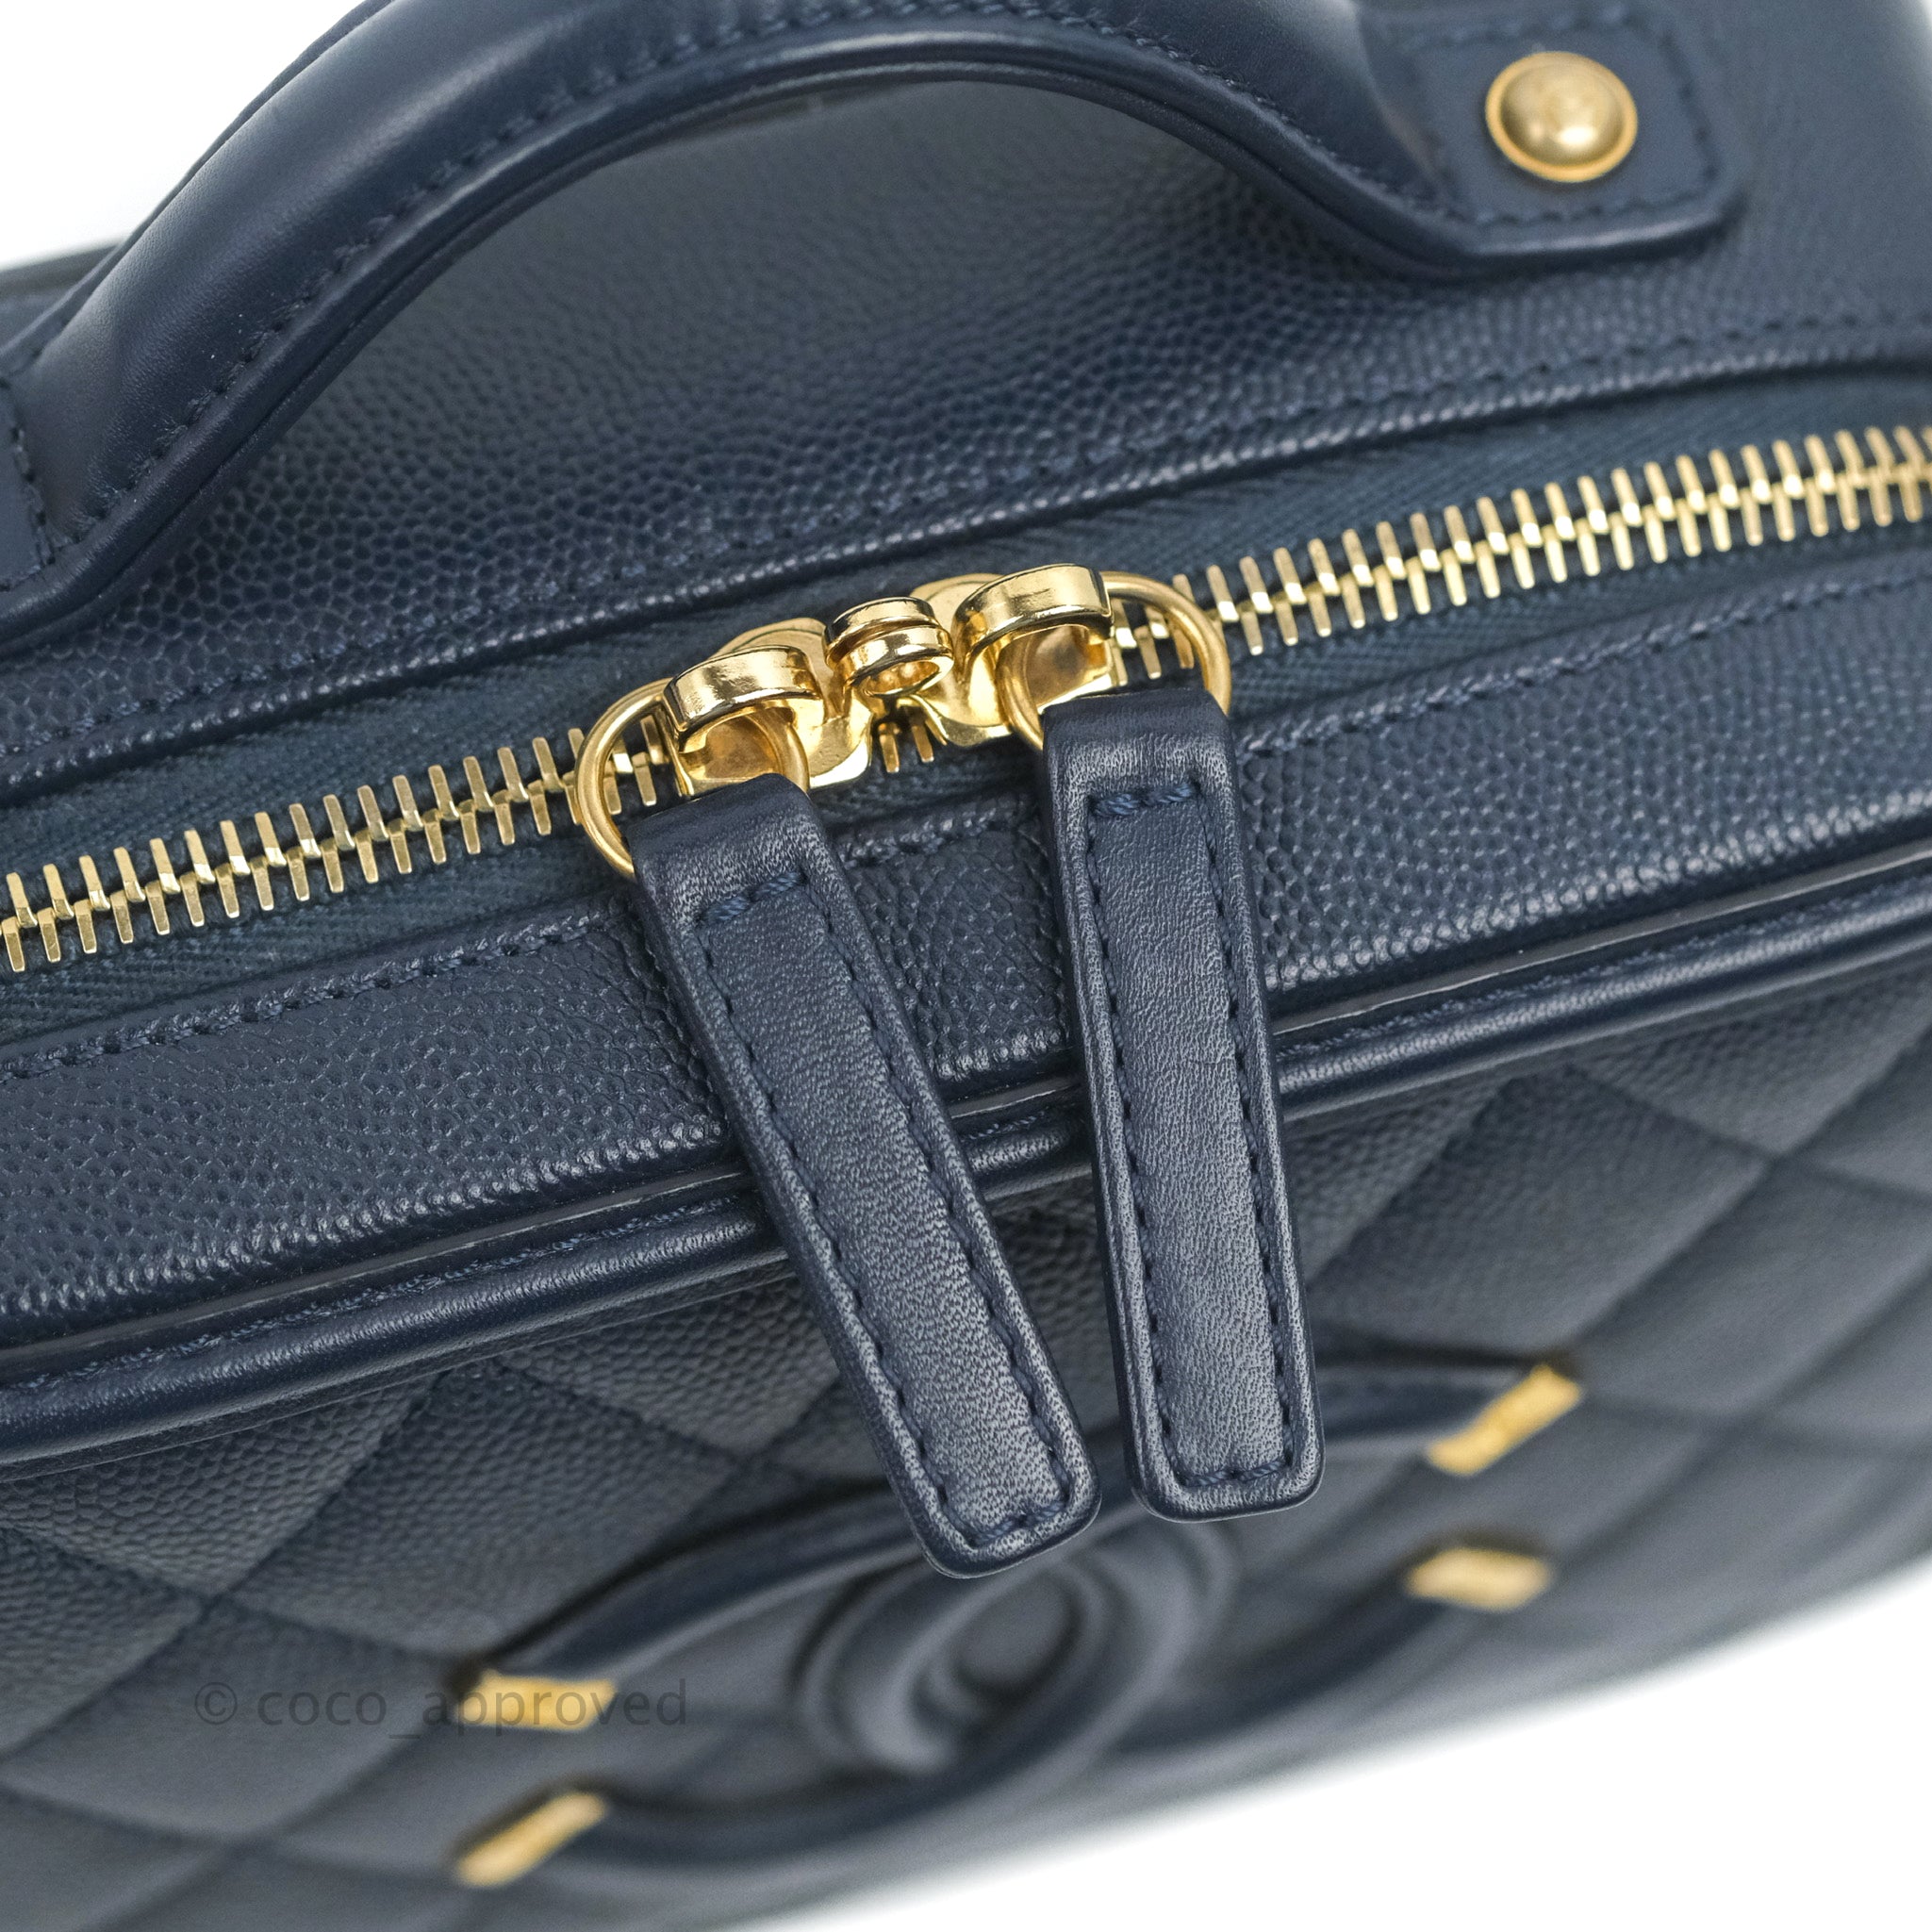 【USD50OFF】Chanel Quilted CC GHW Vanity Bag Cosmetic Handbag Calfskin Lea